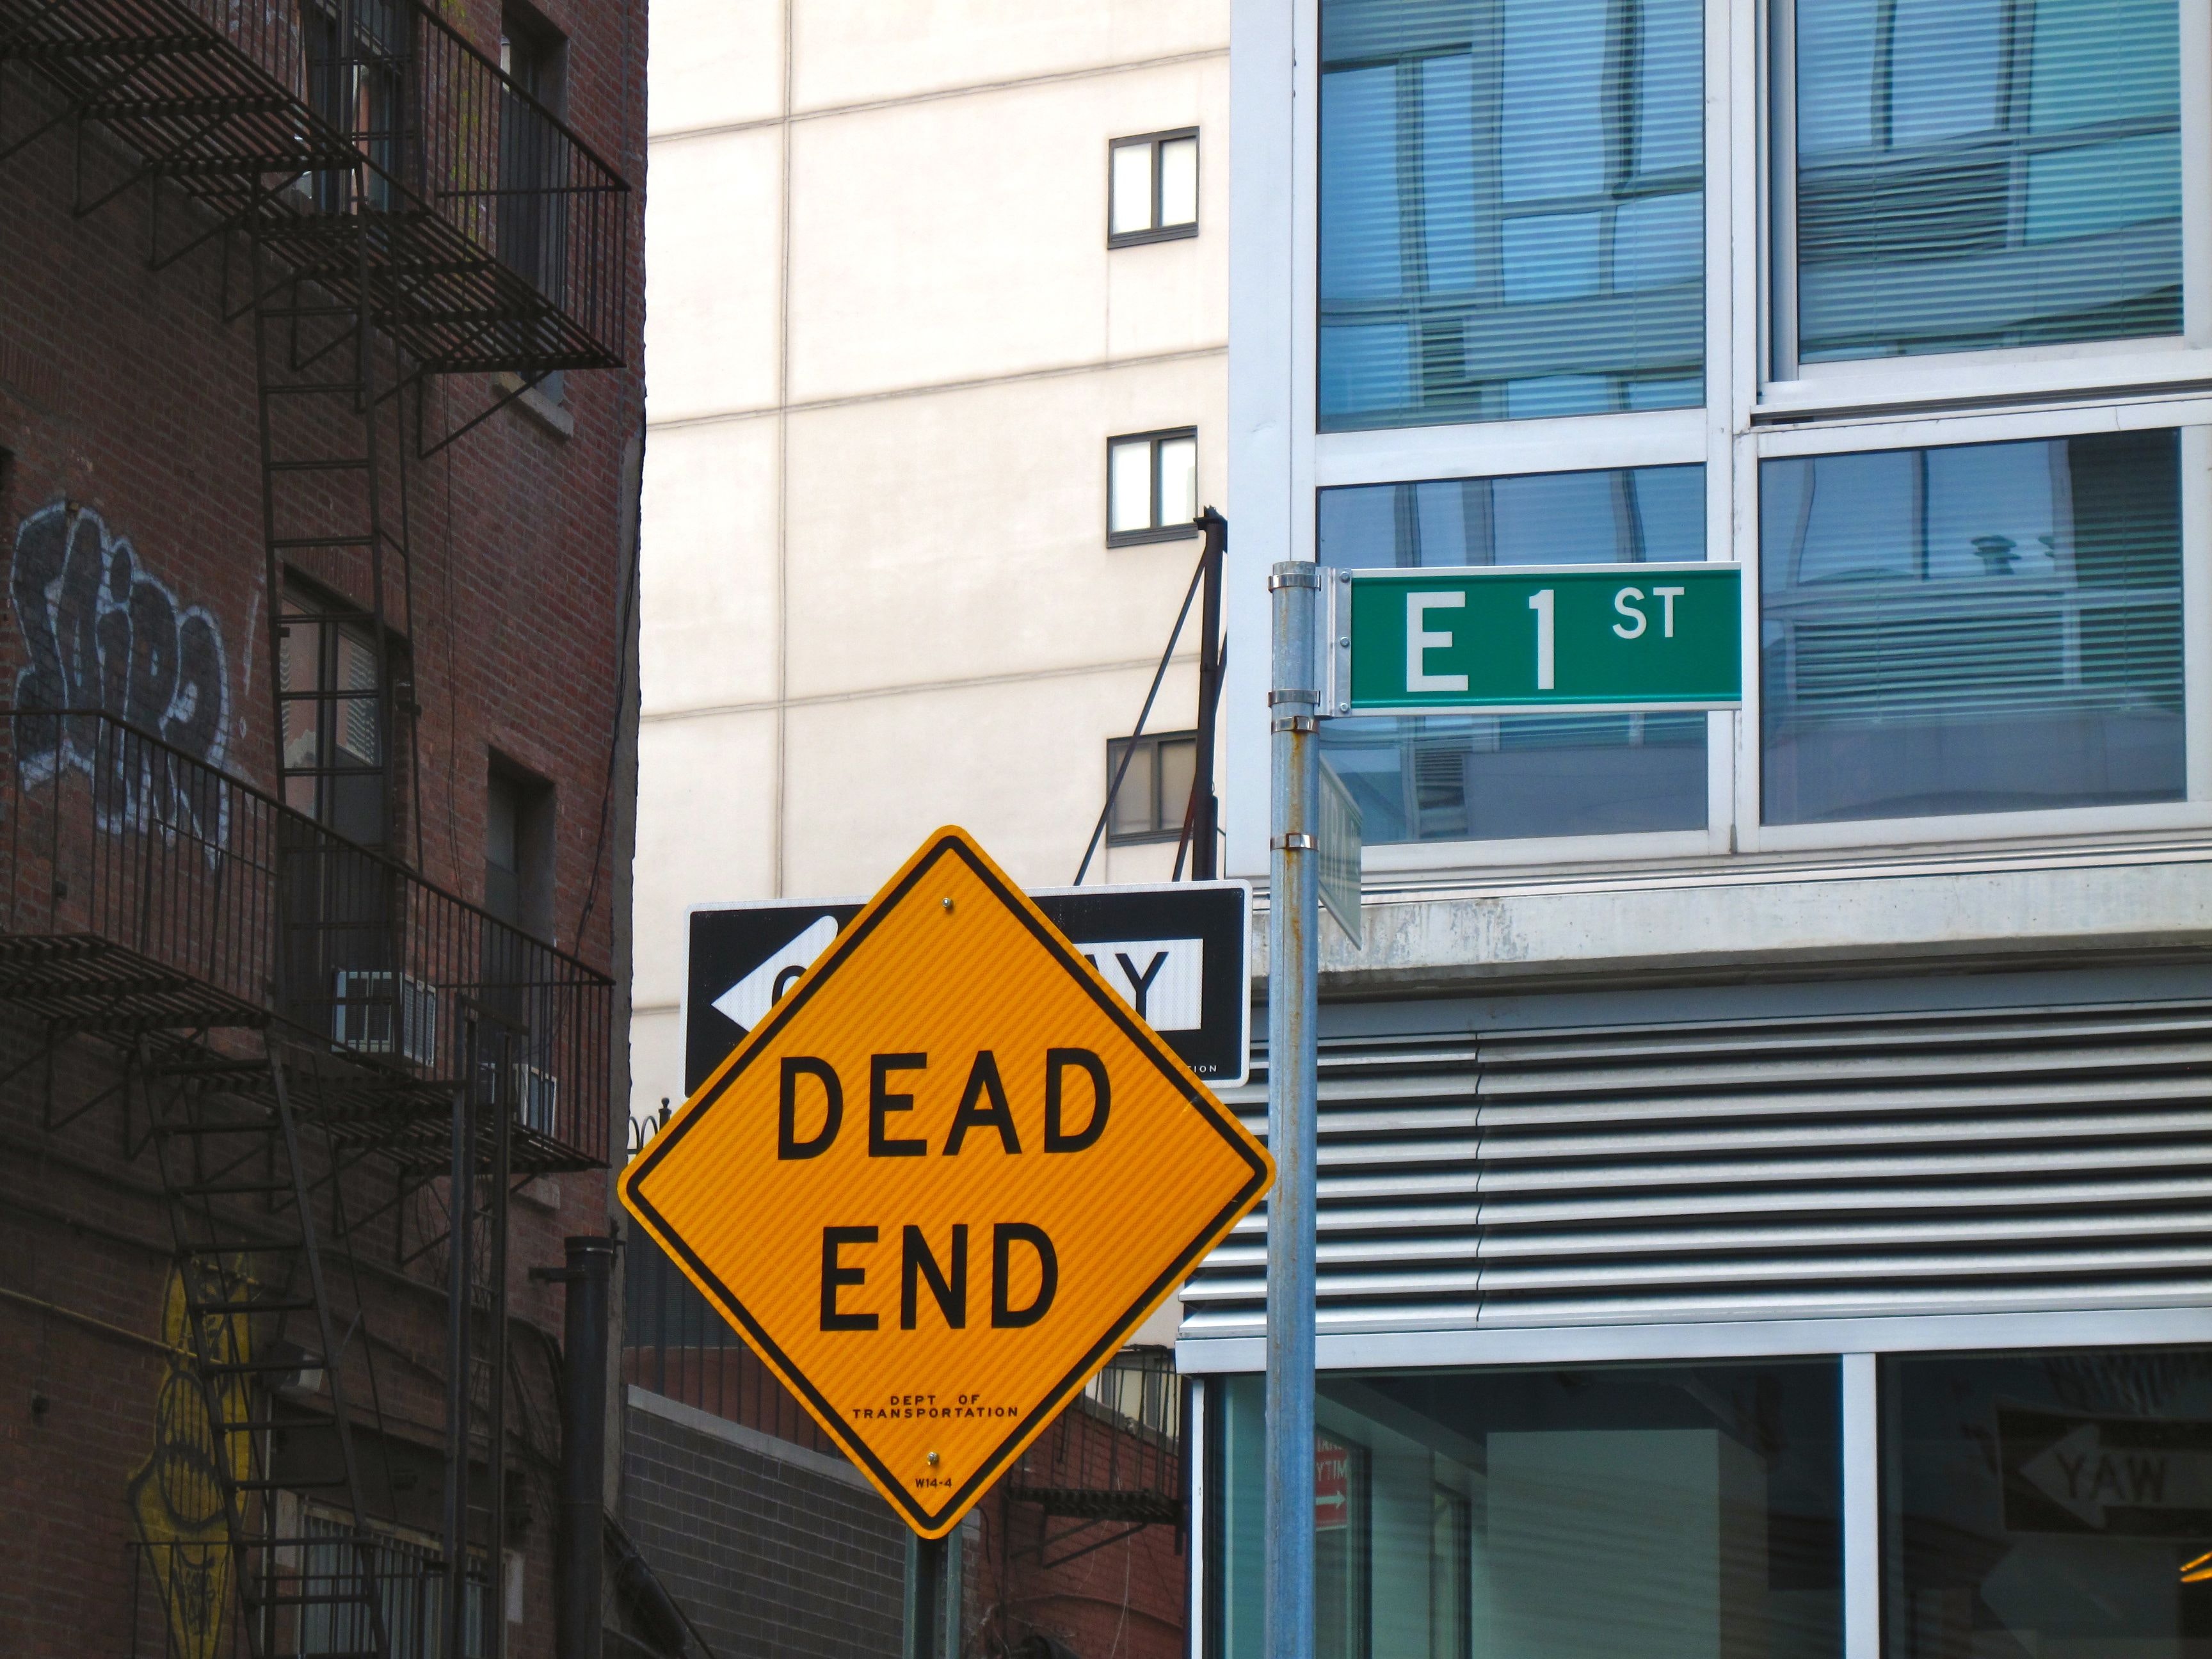 Dead end city street sign